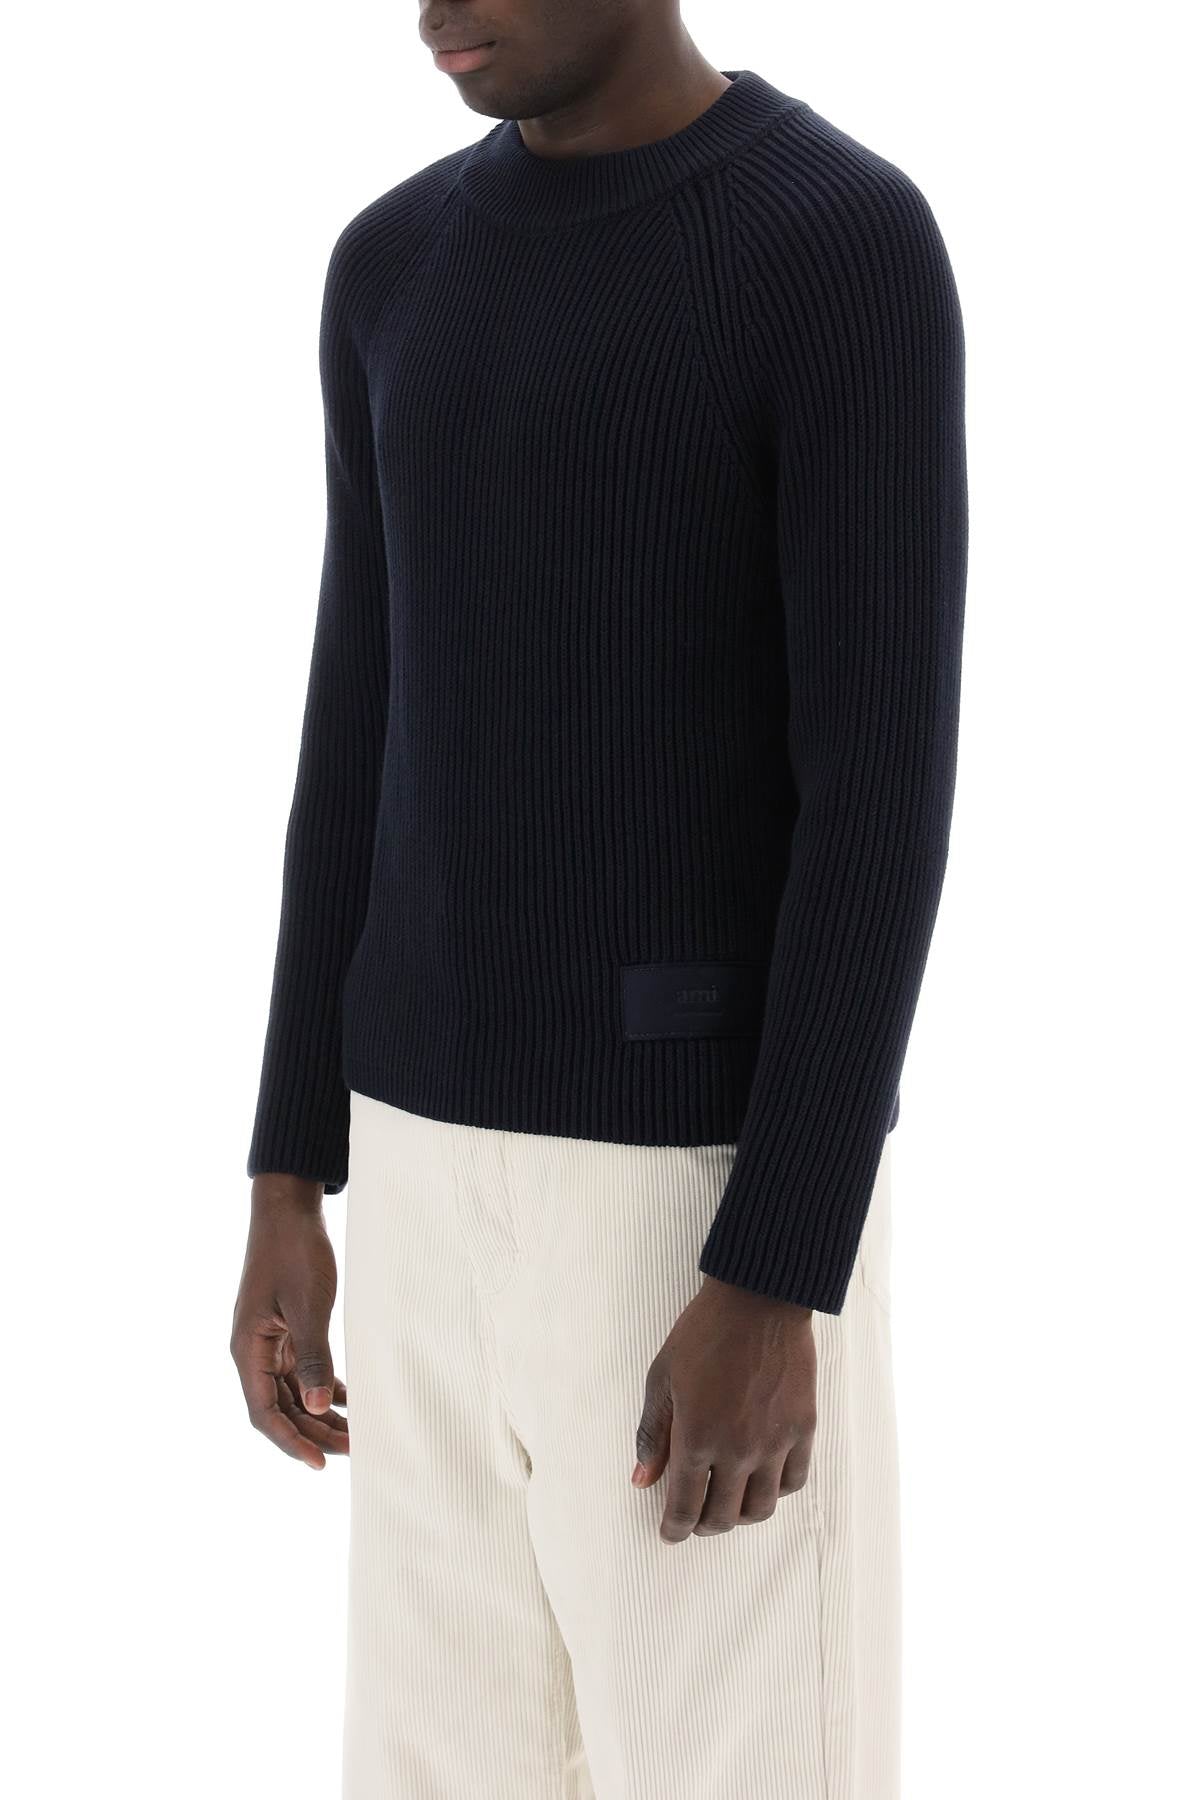 Ami Alexandre Mattiussi Ami paris cotton and wool crew-neck sweater